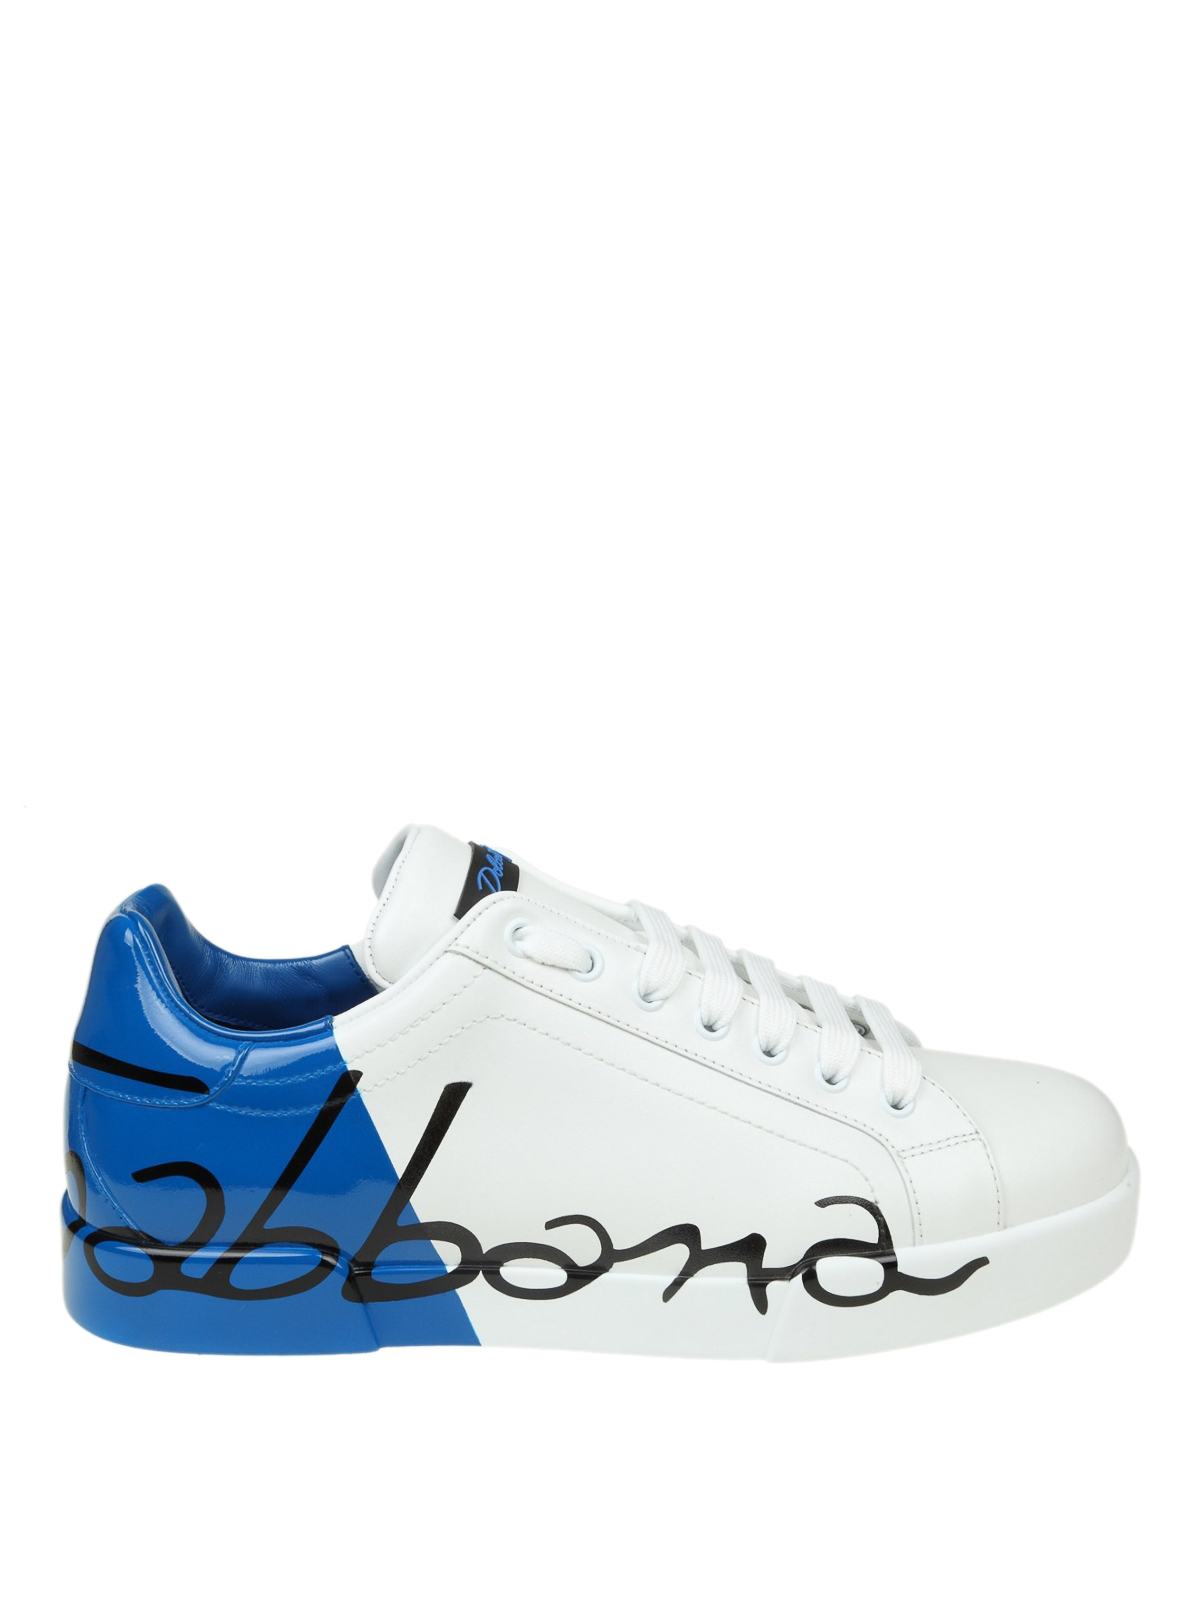 dolce gabbana sneakers blue